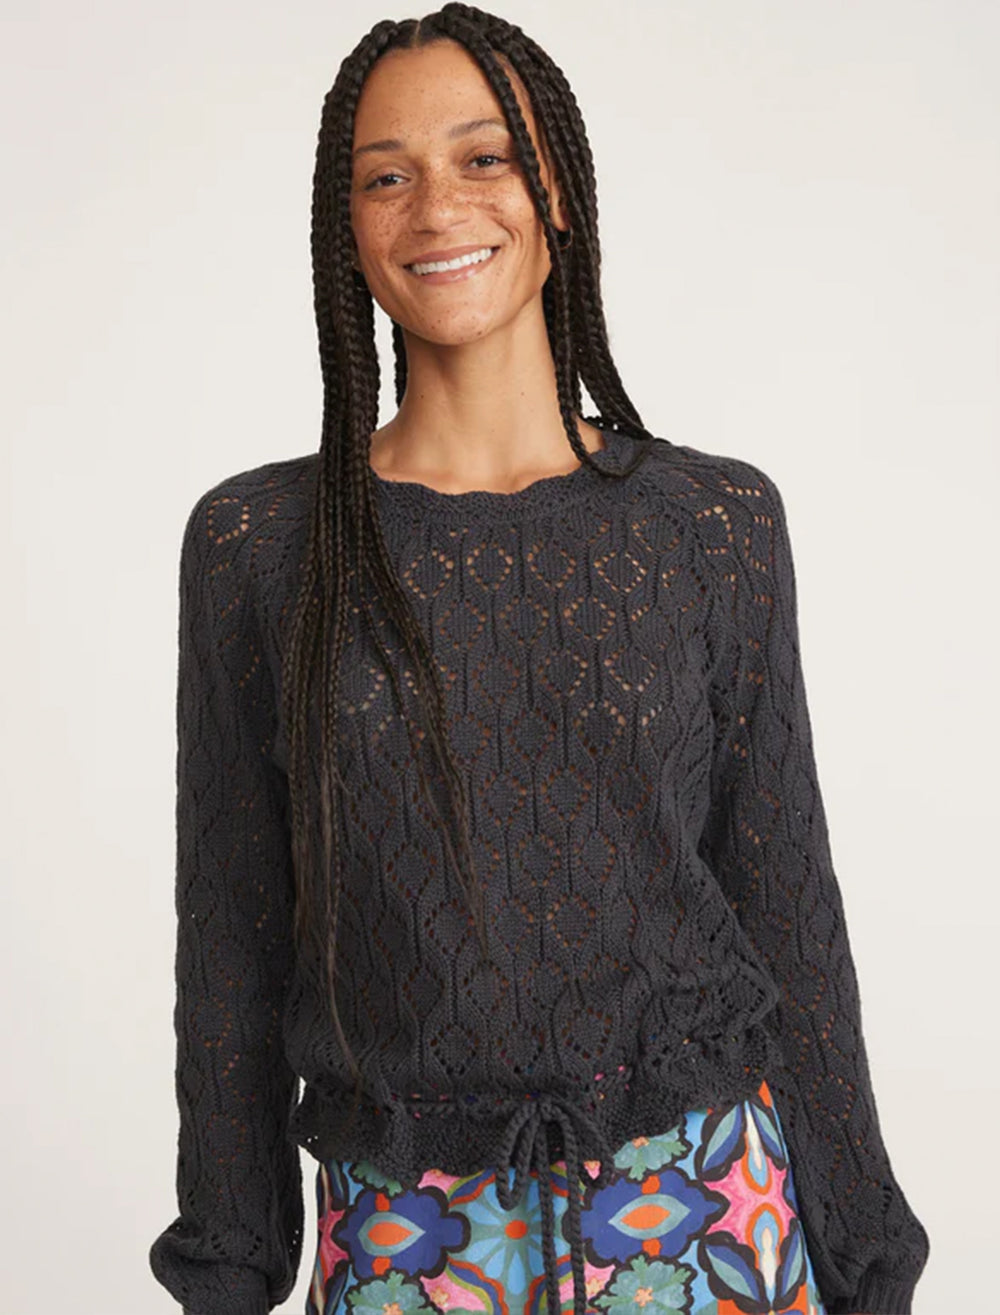 Model wearing Marine Layer's manazanita crochet fringe sweater in black.